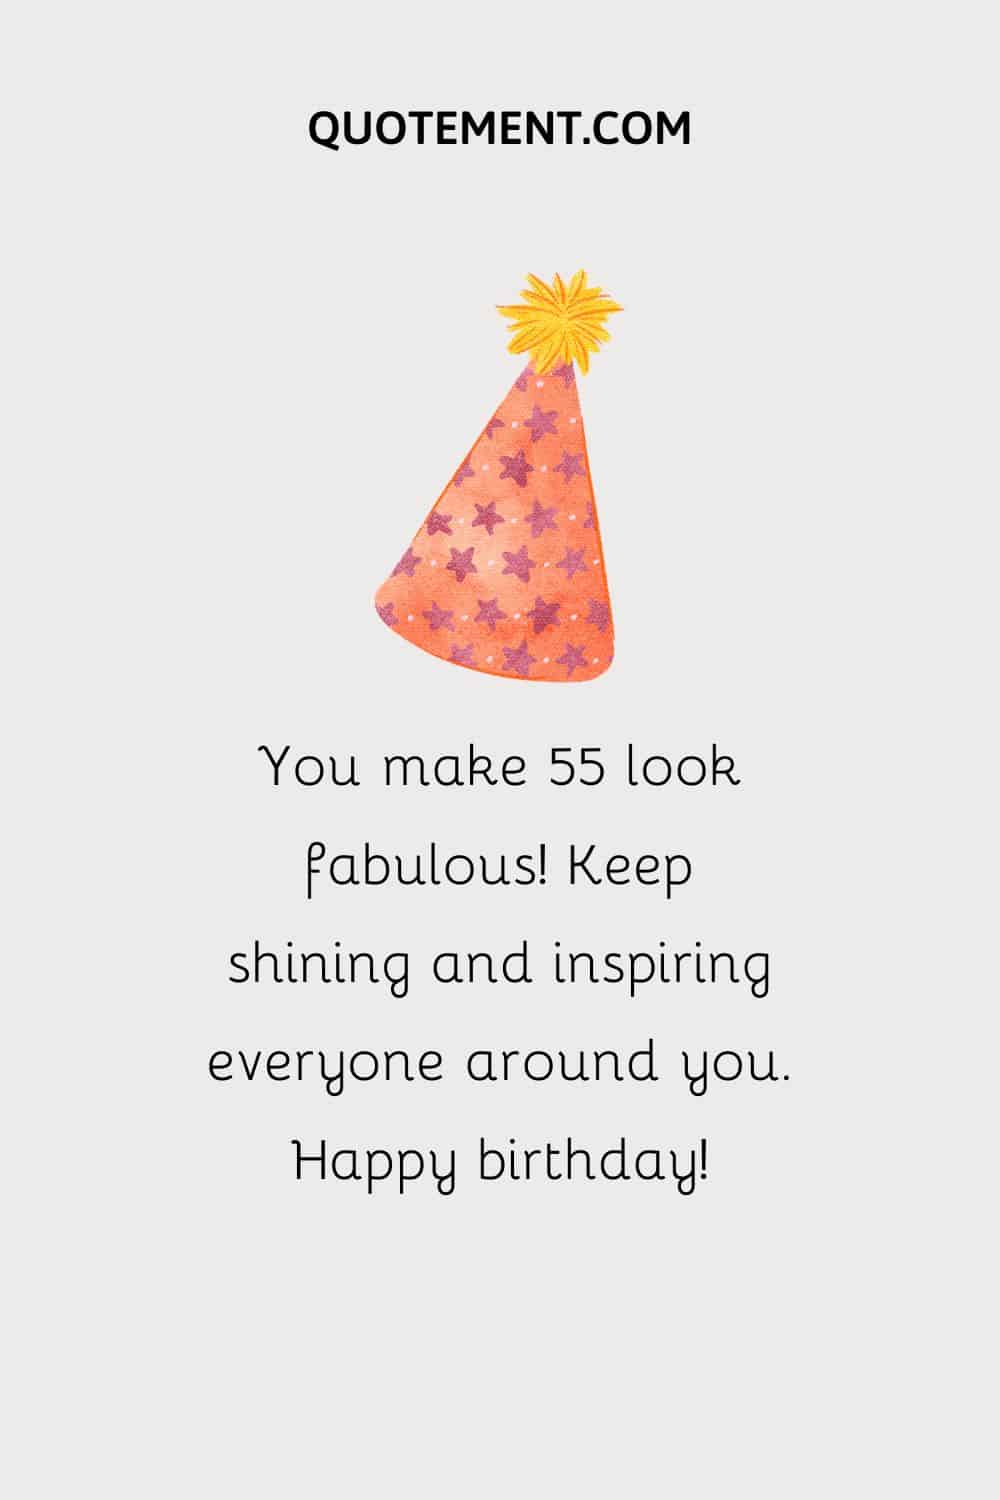 birthday hat illustration representing happy 55th birthday wish